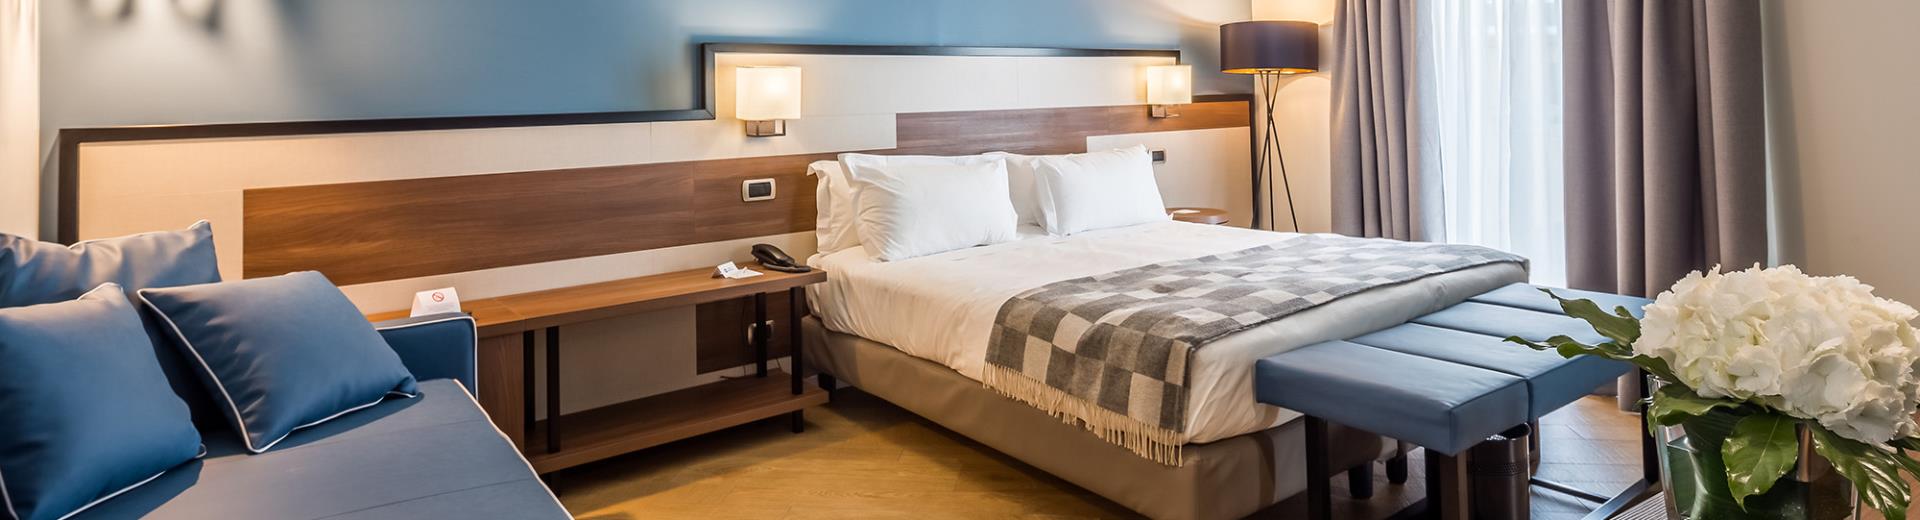 Superior confortable chambres Hôtel Gênes - Best Western Hotel Metropoli